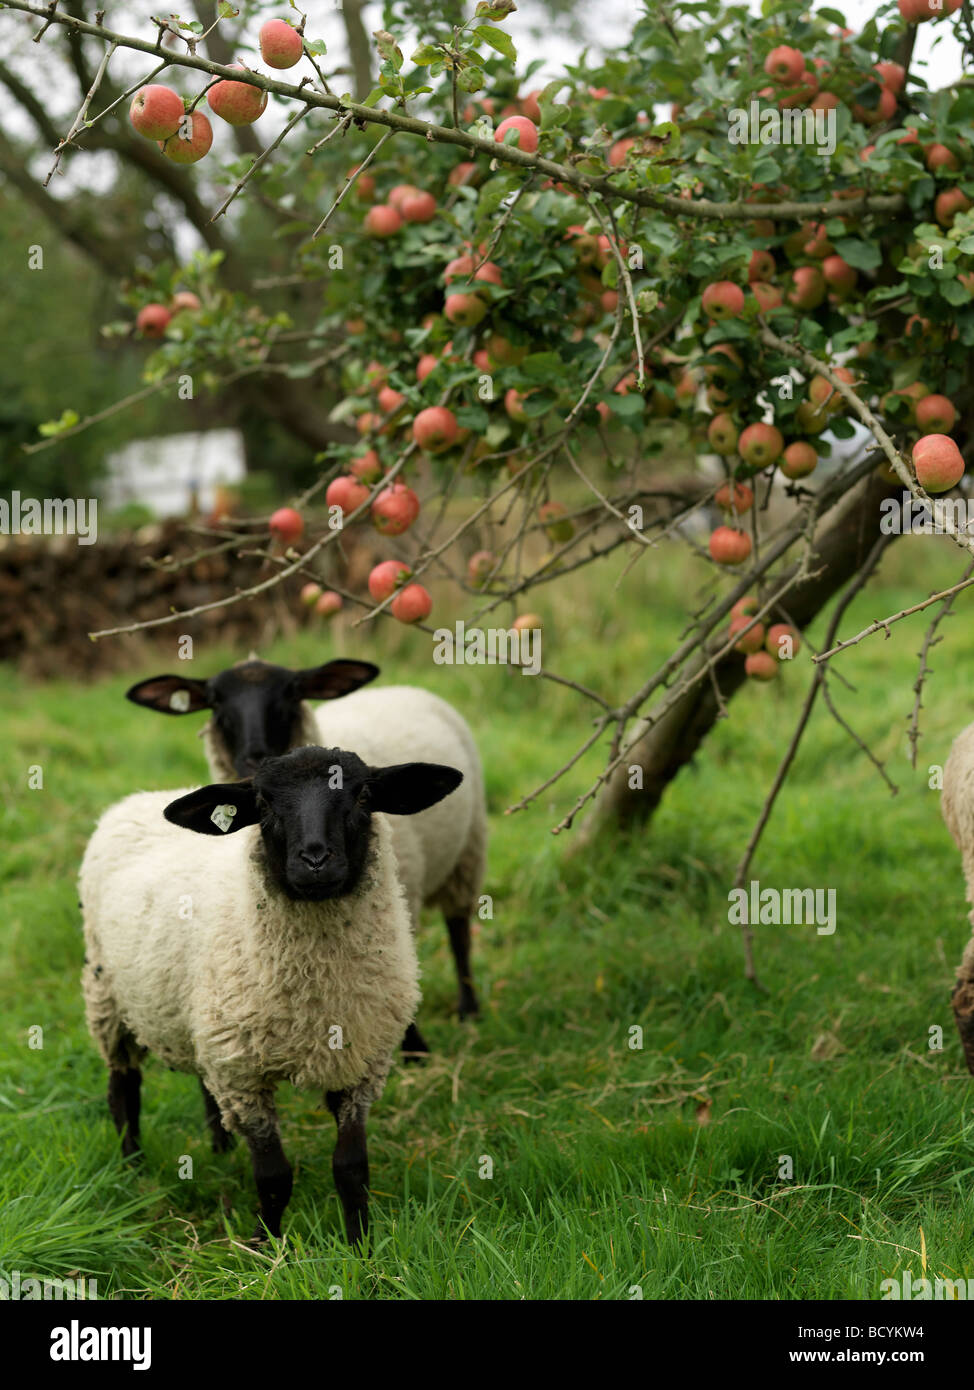 Sheep under apple tree Stock Photo